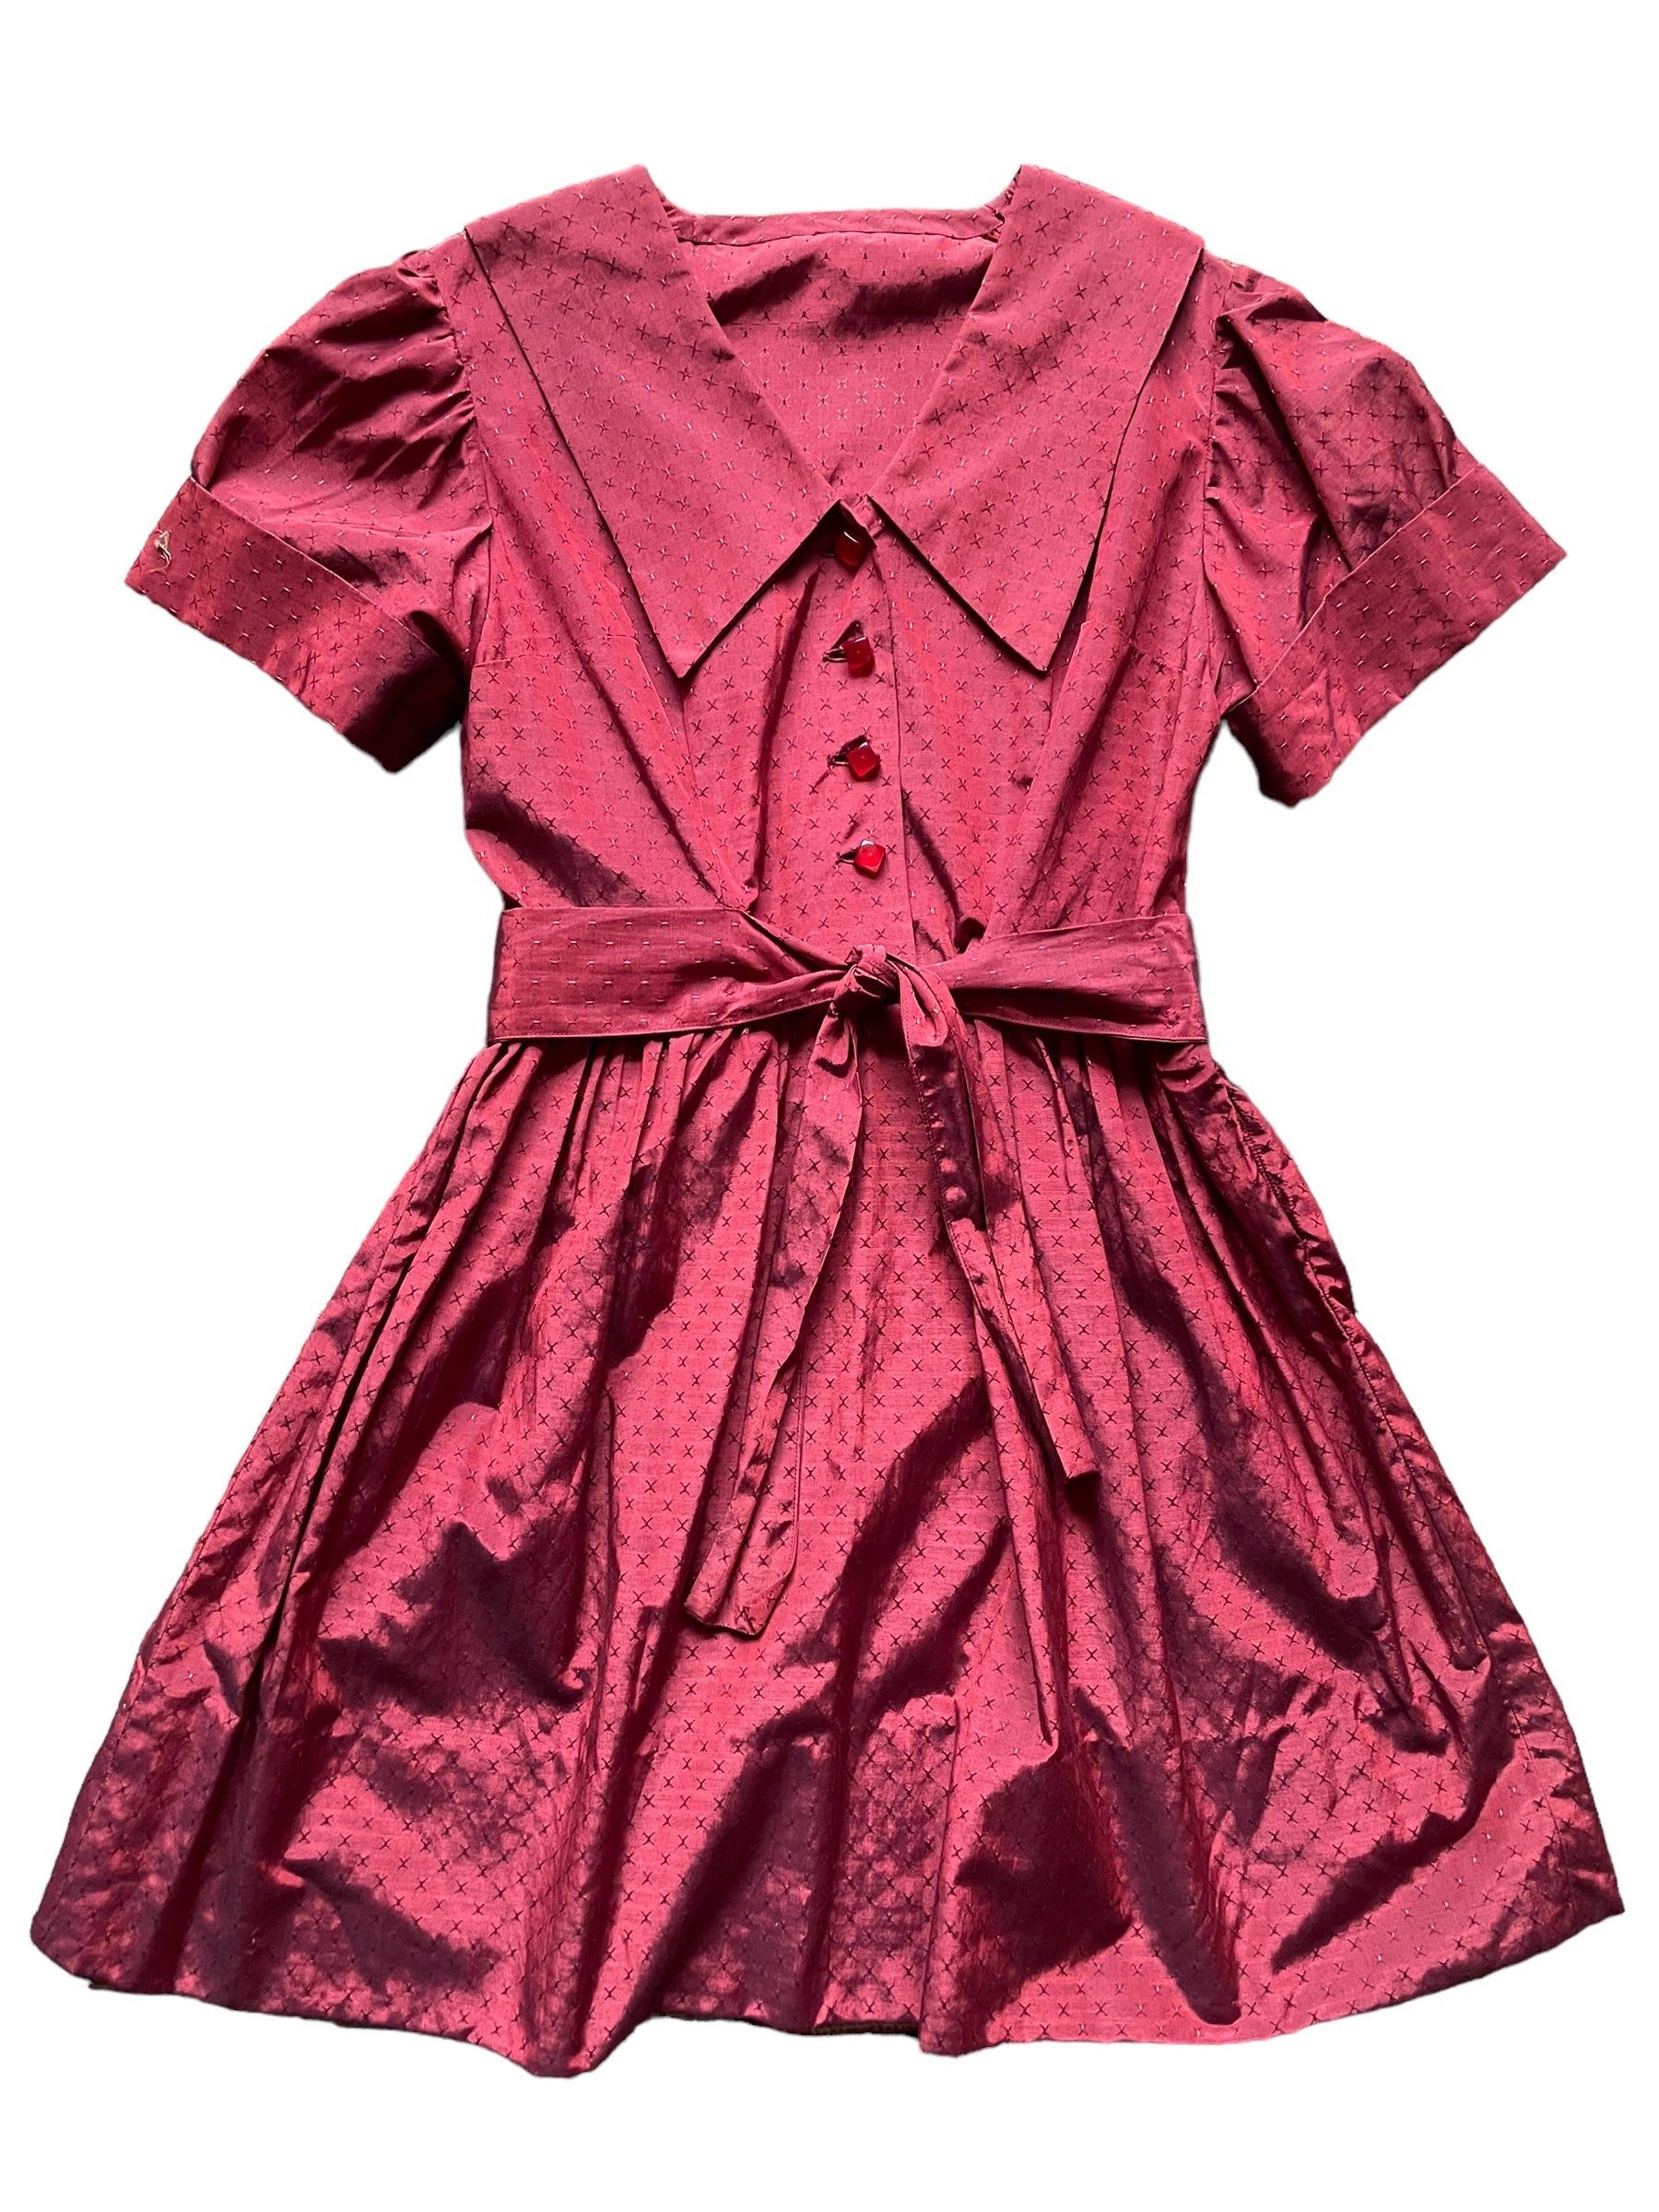 Full front view of Vintage 1950s Handmade Red Satin Dress  SZ M |  Barn Owl Vintage Dresses | Seattle Ladies Vintage Clothing